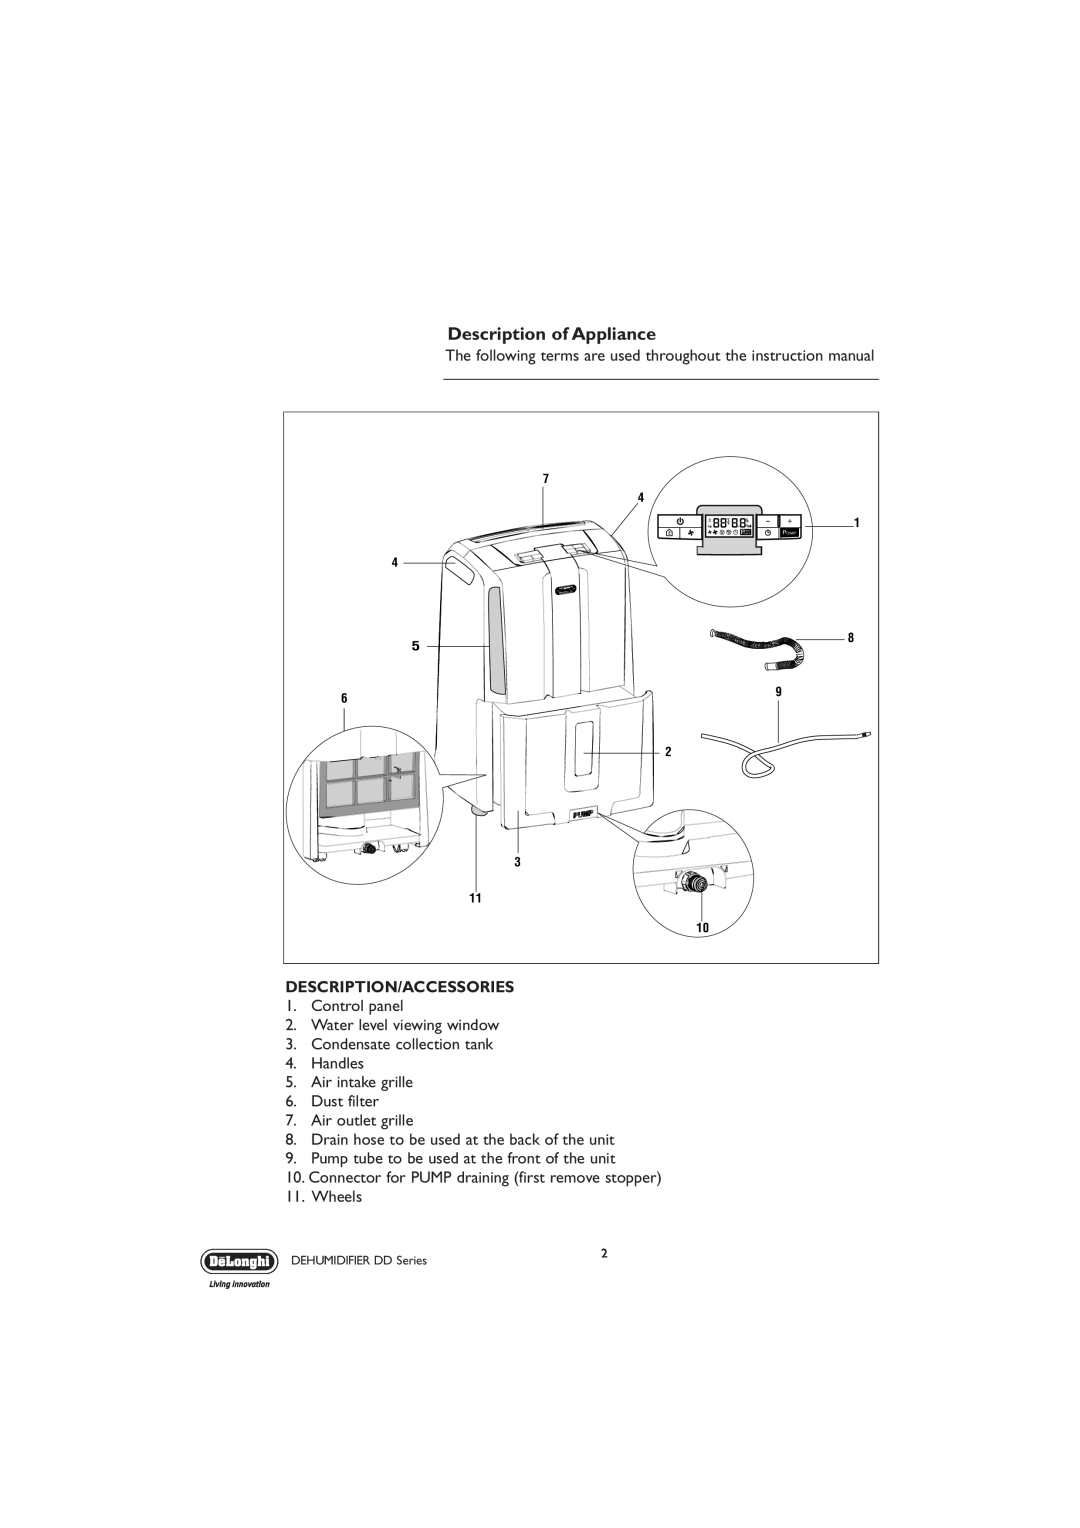 DeLonghi DD SERIES manual Description of Appliance, Description/Accessories 